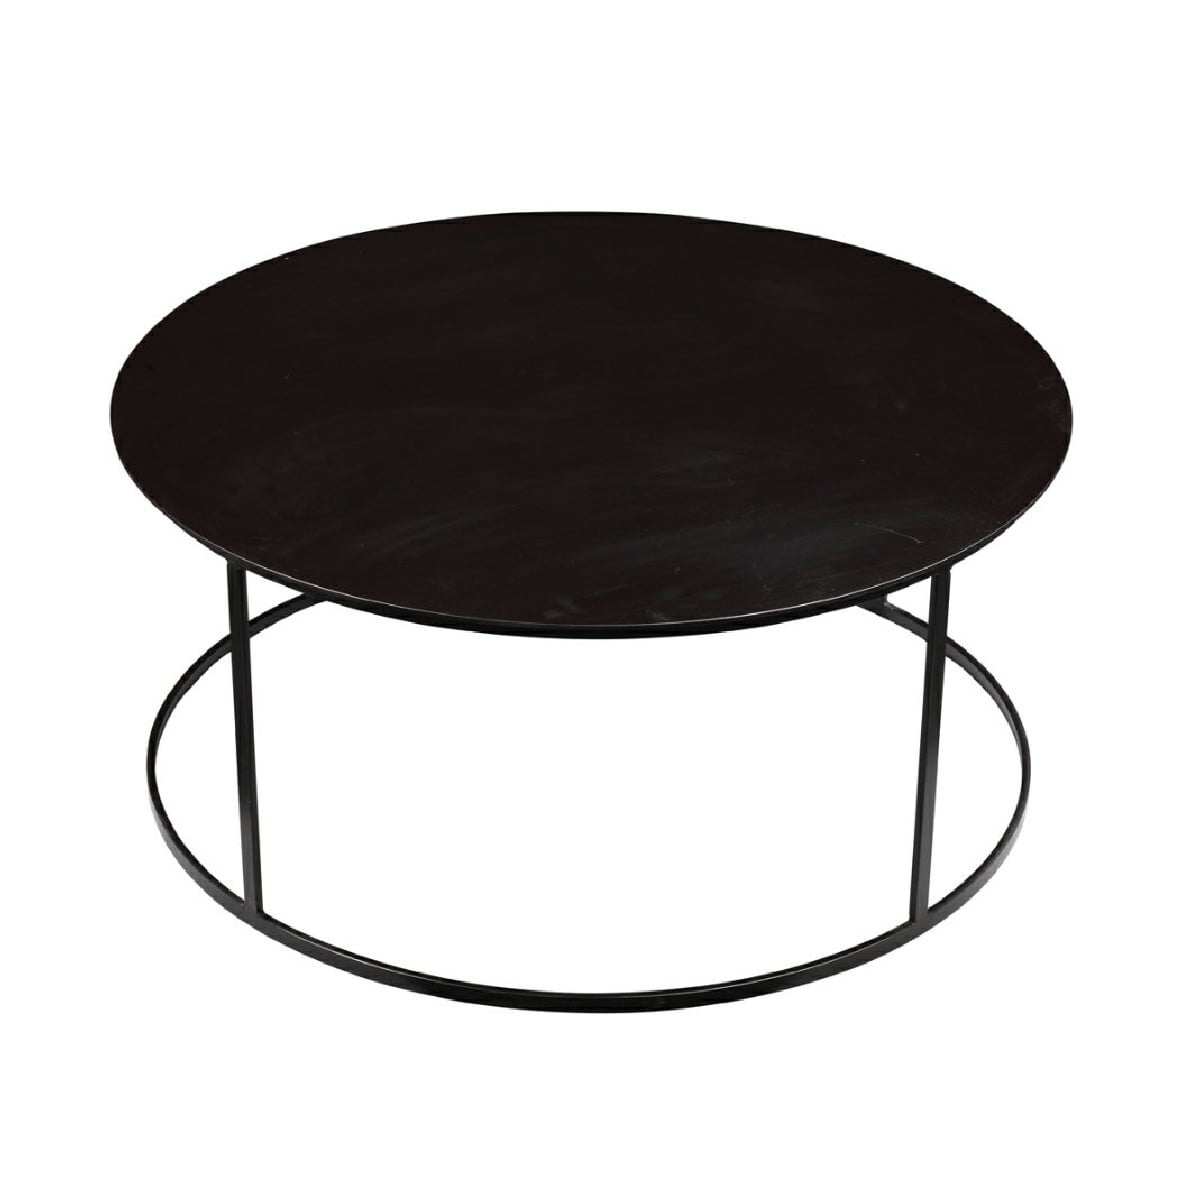 Bm214008 Round Metal Frame Side Table With Tubular Legs - Dark Brown